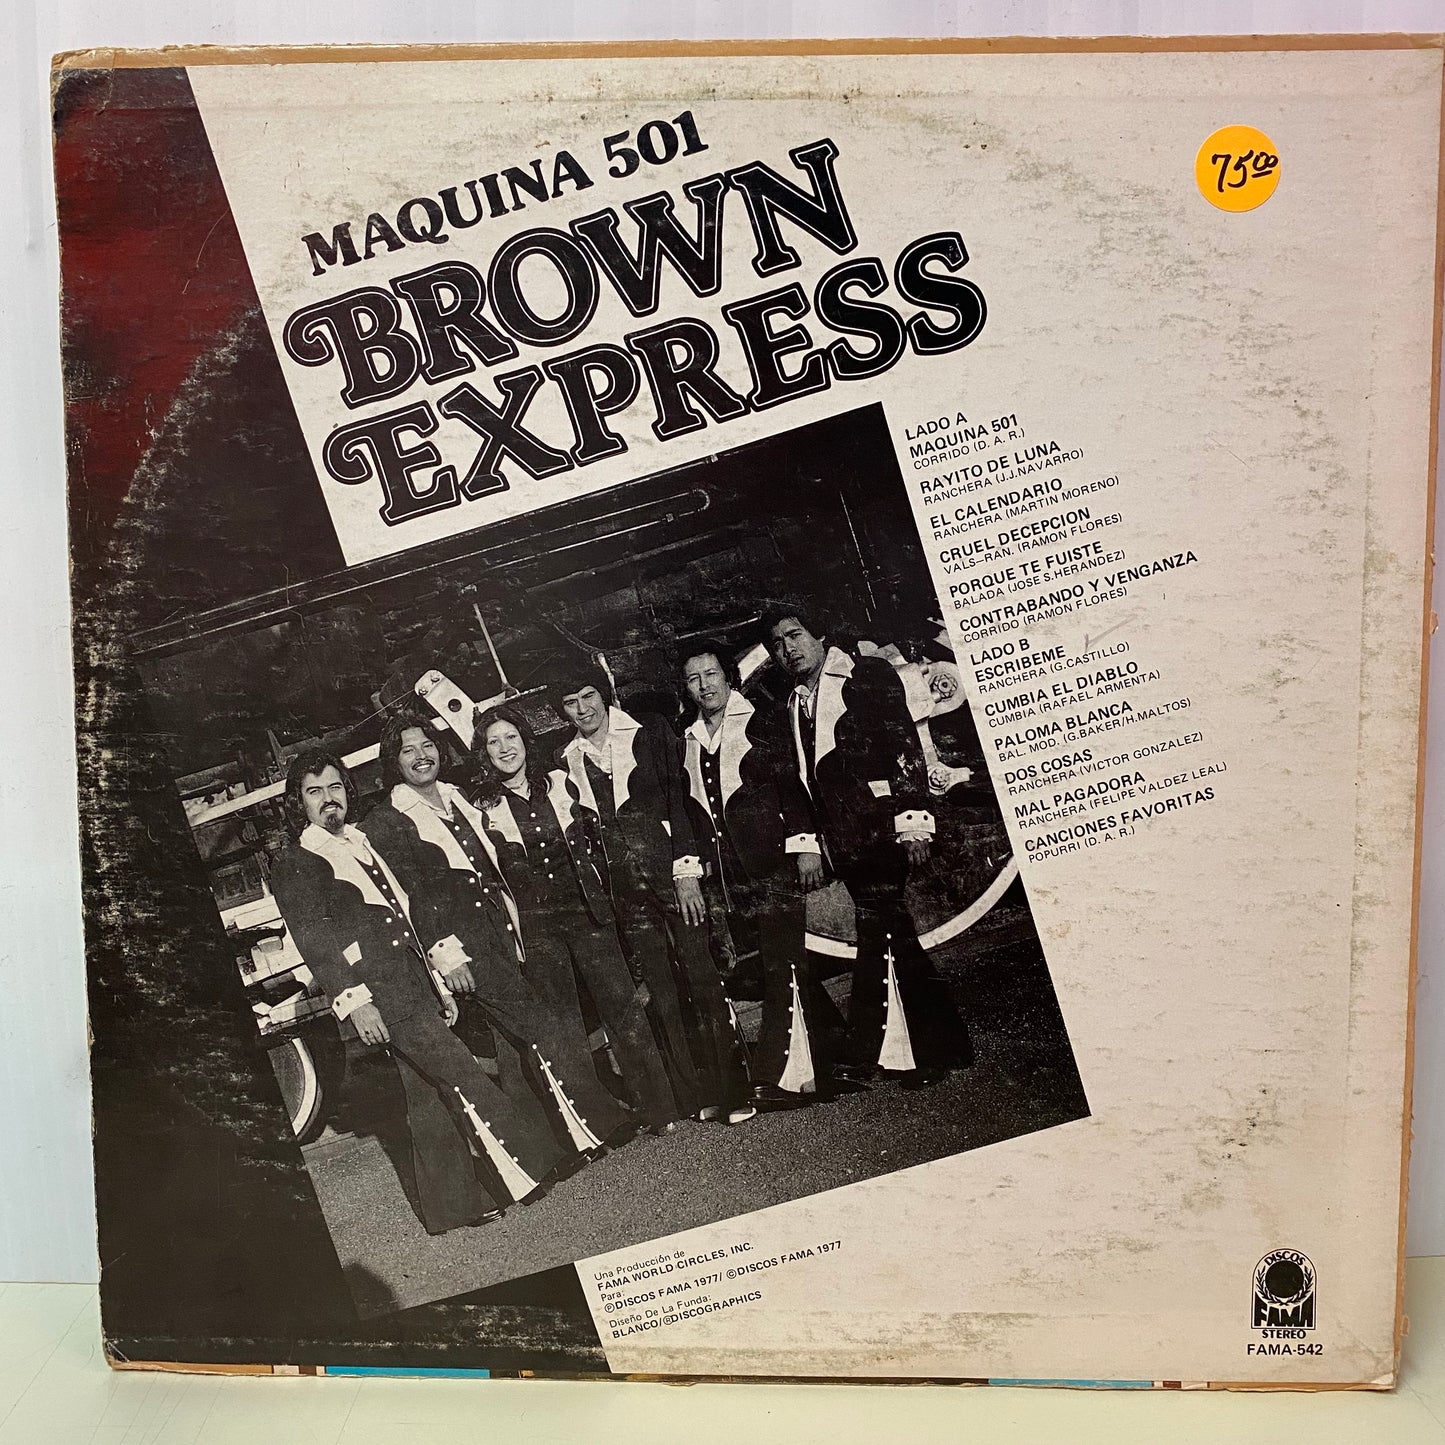 Brown Express - Ya Viene!! Maquina 501 (Vinyl)